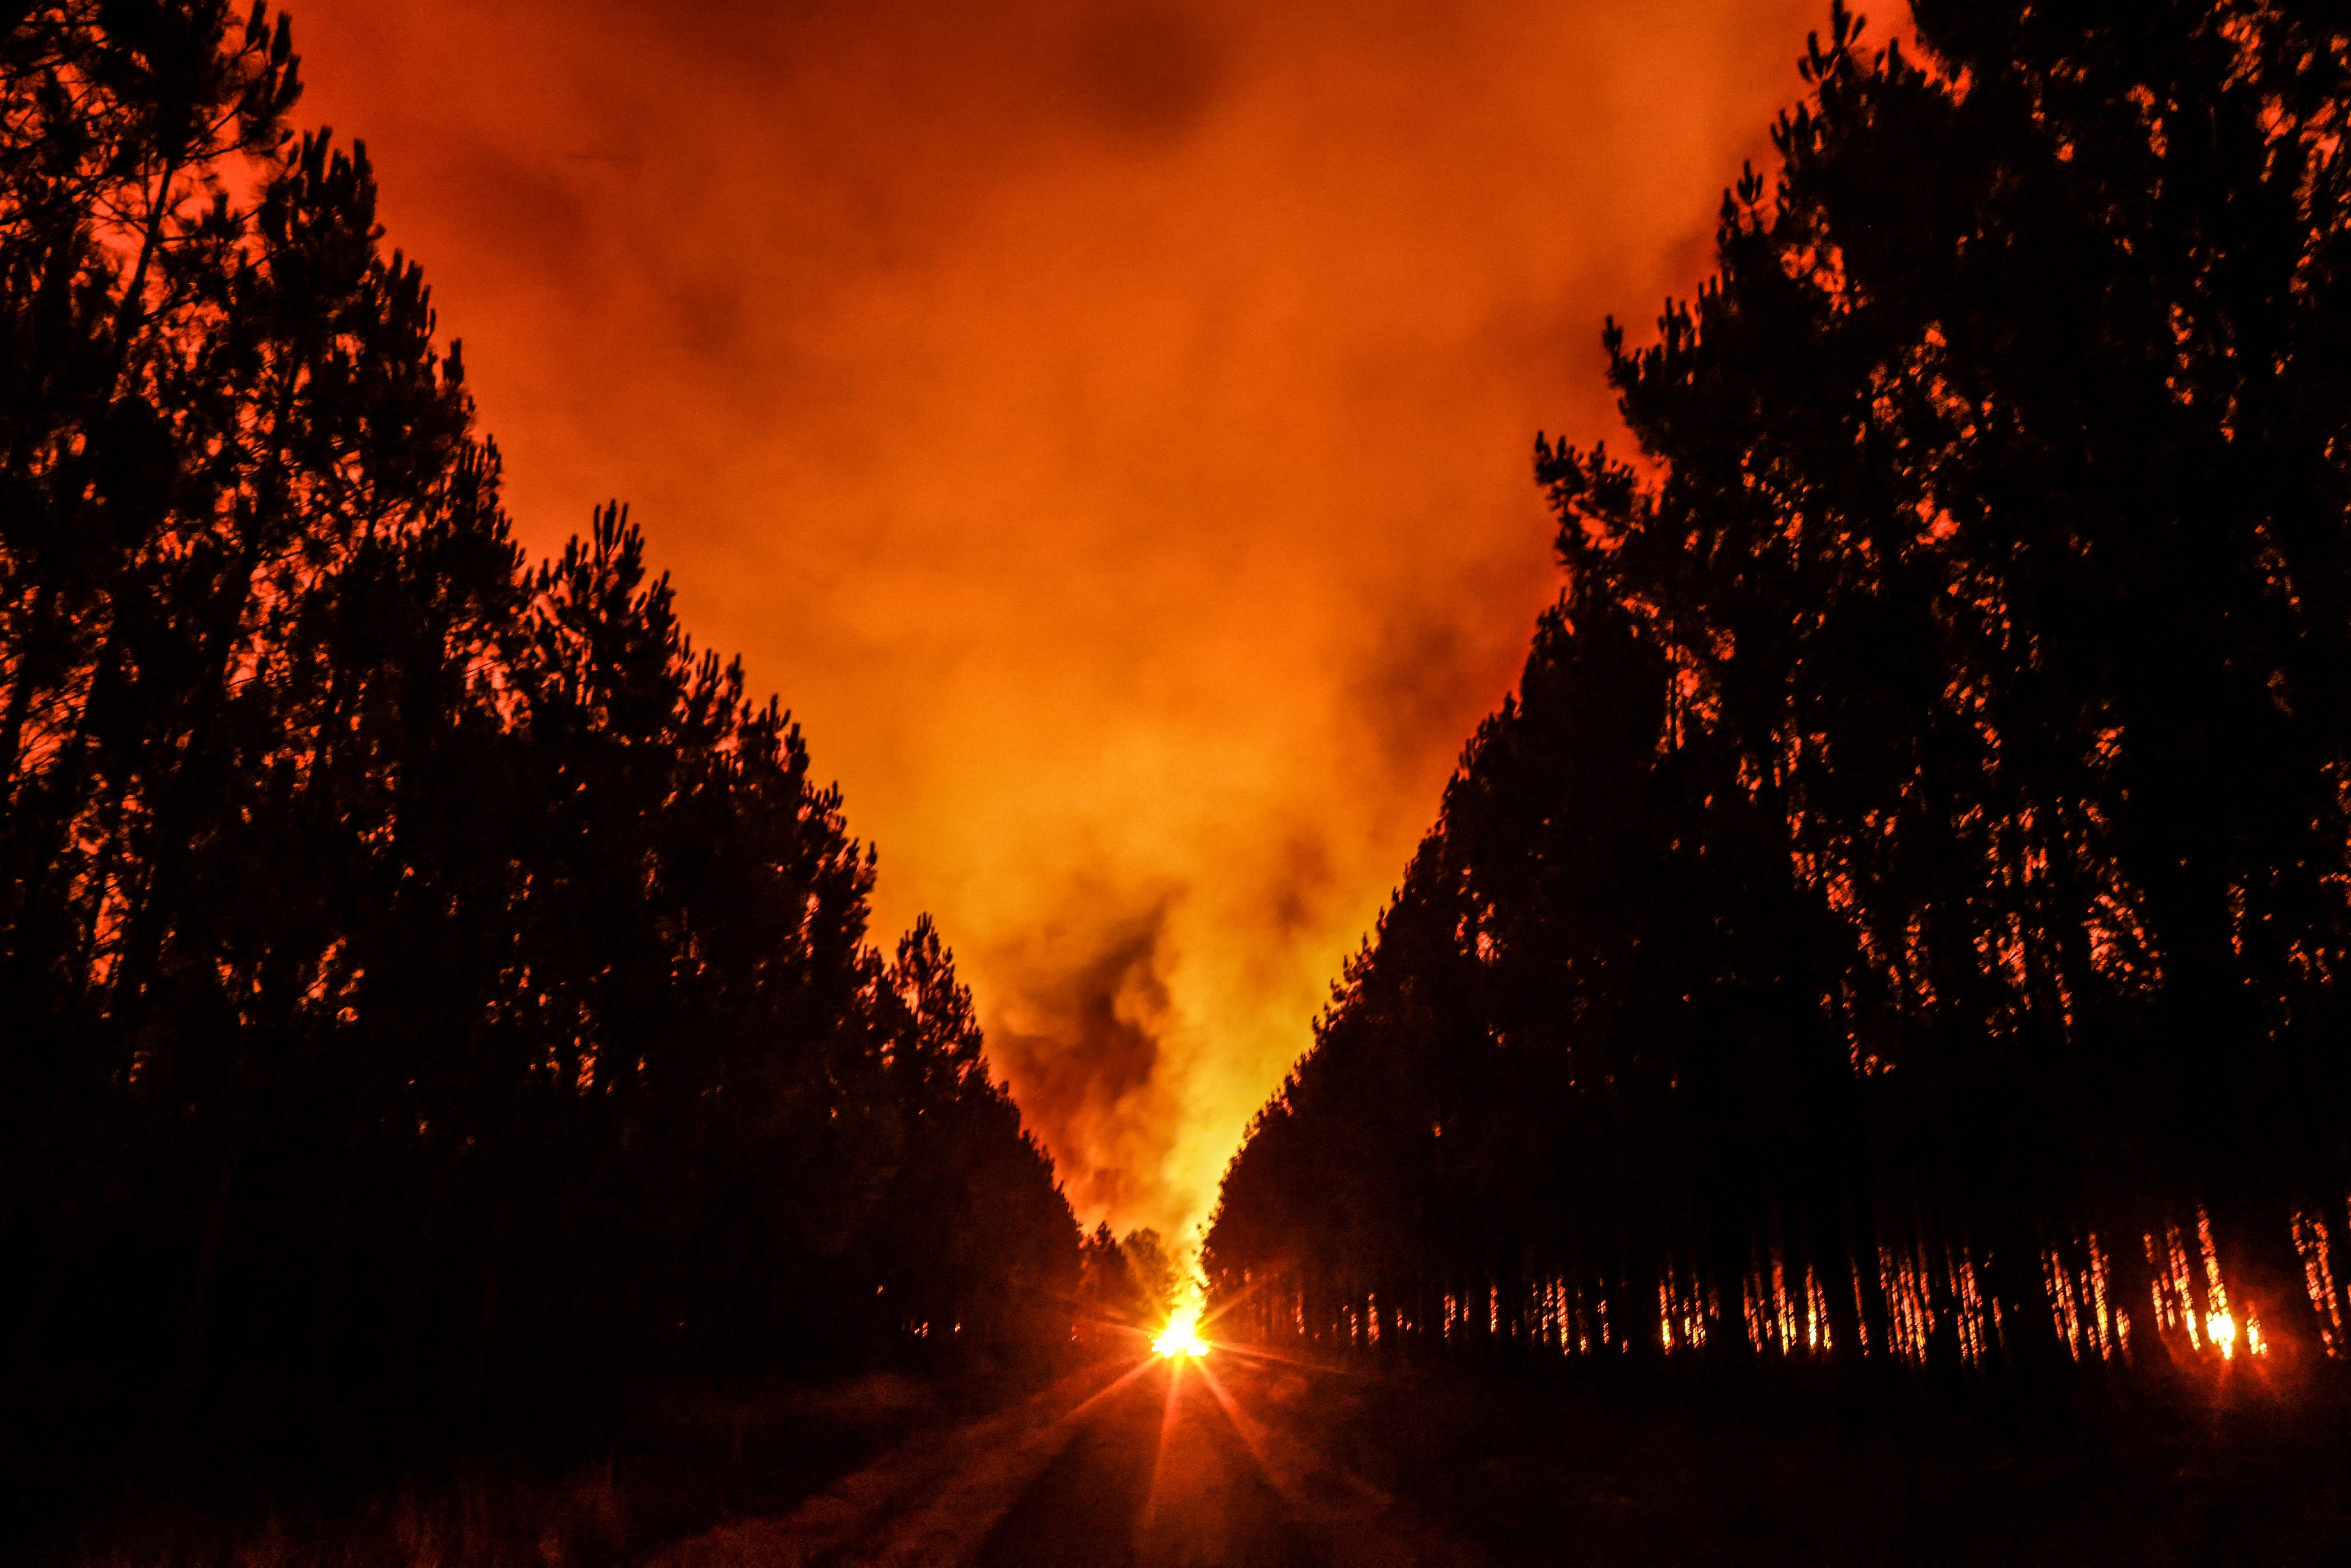 The rising sun illuminates the smoke of a forest fire near Belin-Beliet